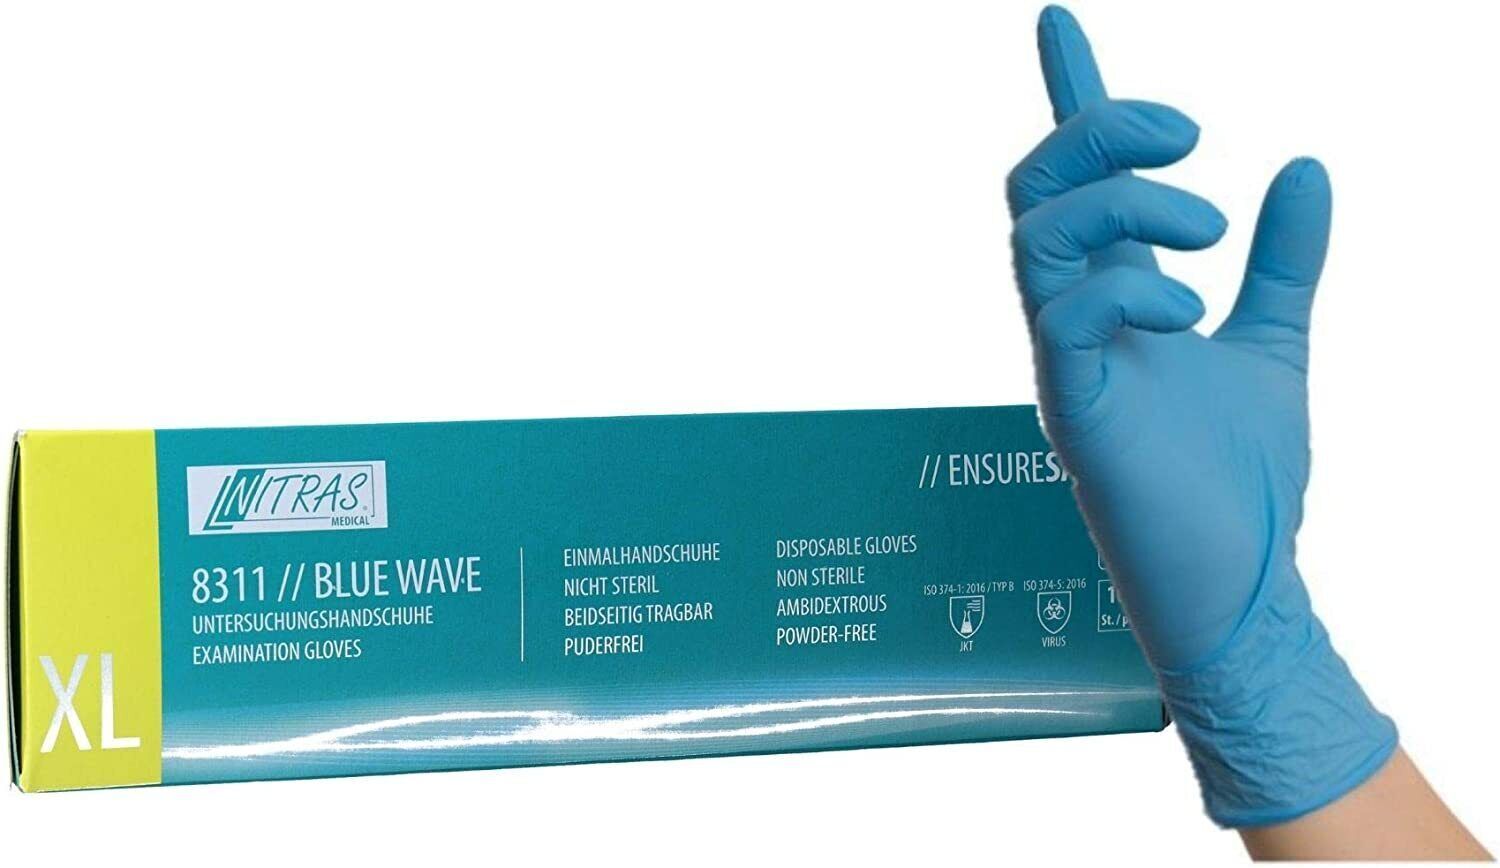 8311 Nitras blue wave nitril Einmalhandschuhe blau puderfrei 10 Boxen je 100 Stück GrS-2XL horzefix